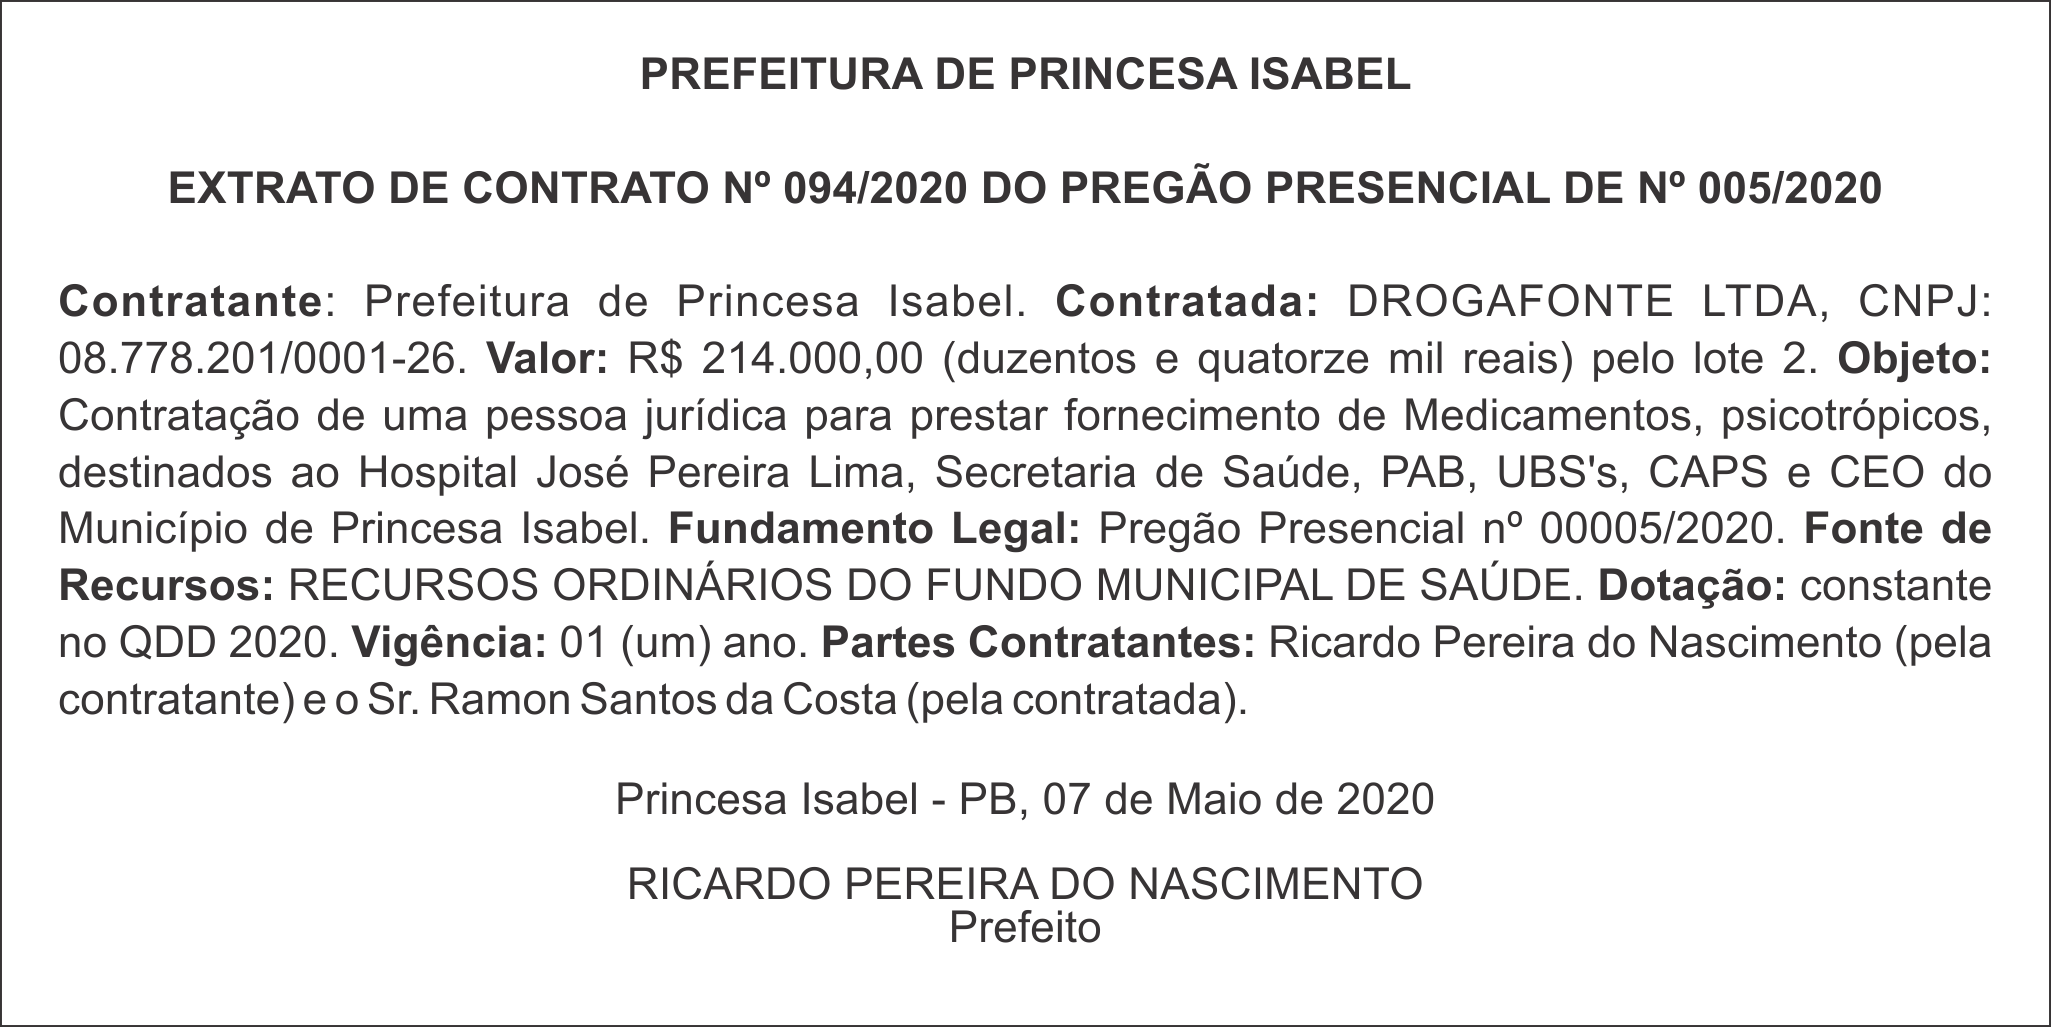 PREFEITURA DE PRINCESA ISABEL – EXTRATO DE CONTRATO Nº 094/2020 – PREGÃO PRESENCIAL Nº 005/2020